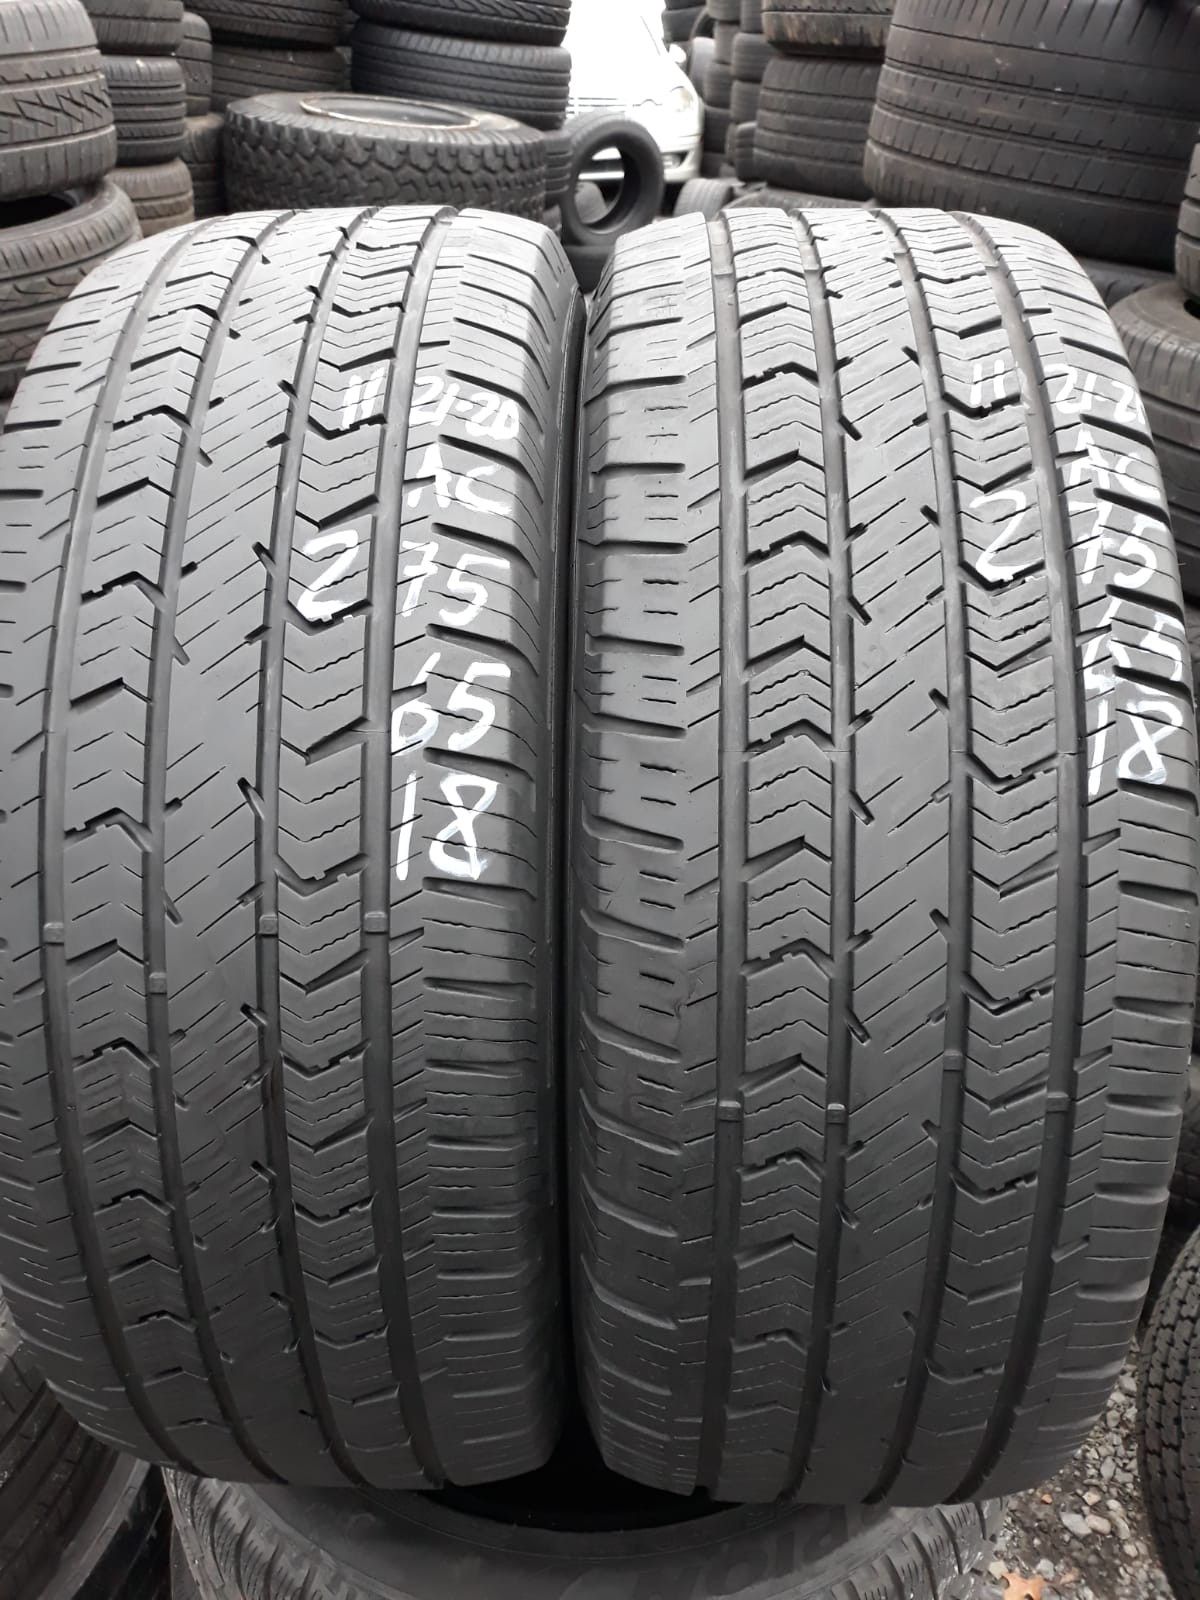 275/65-18 #2 tires